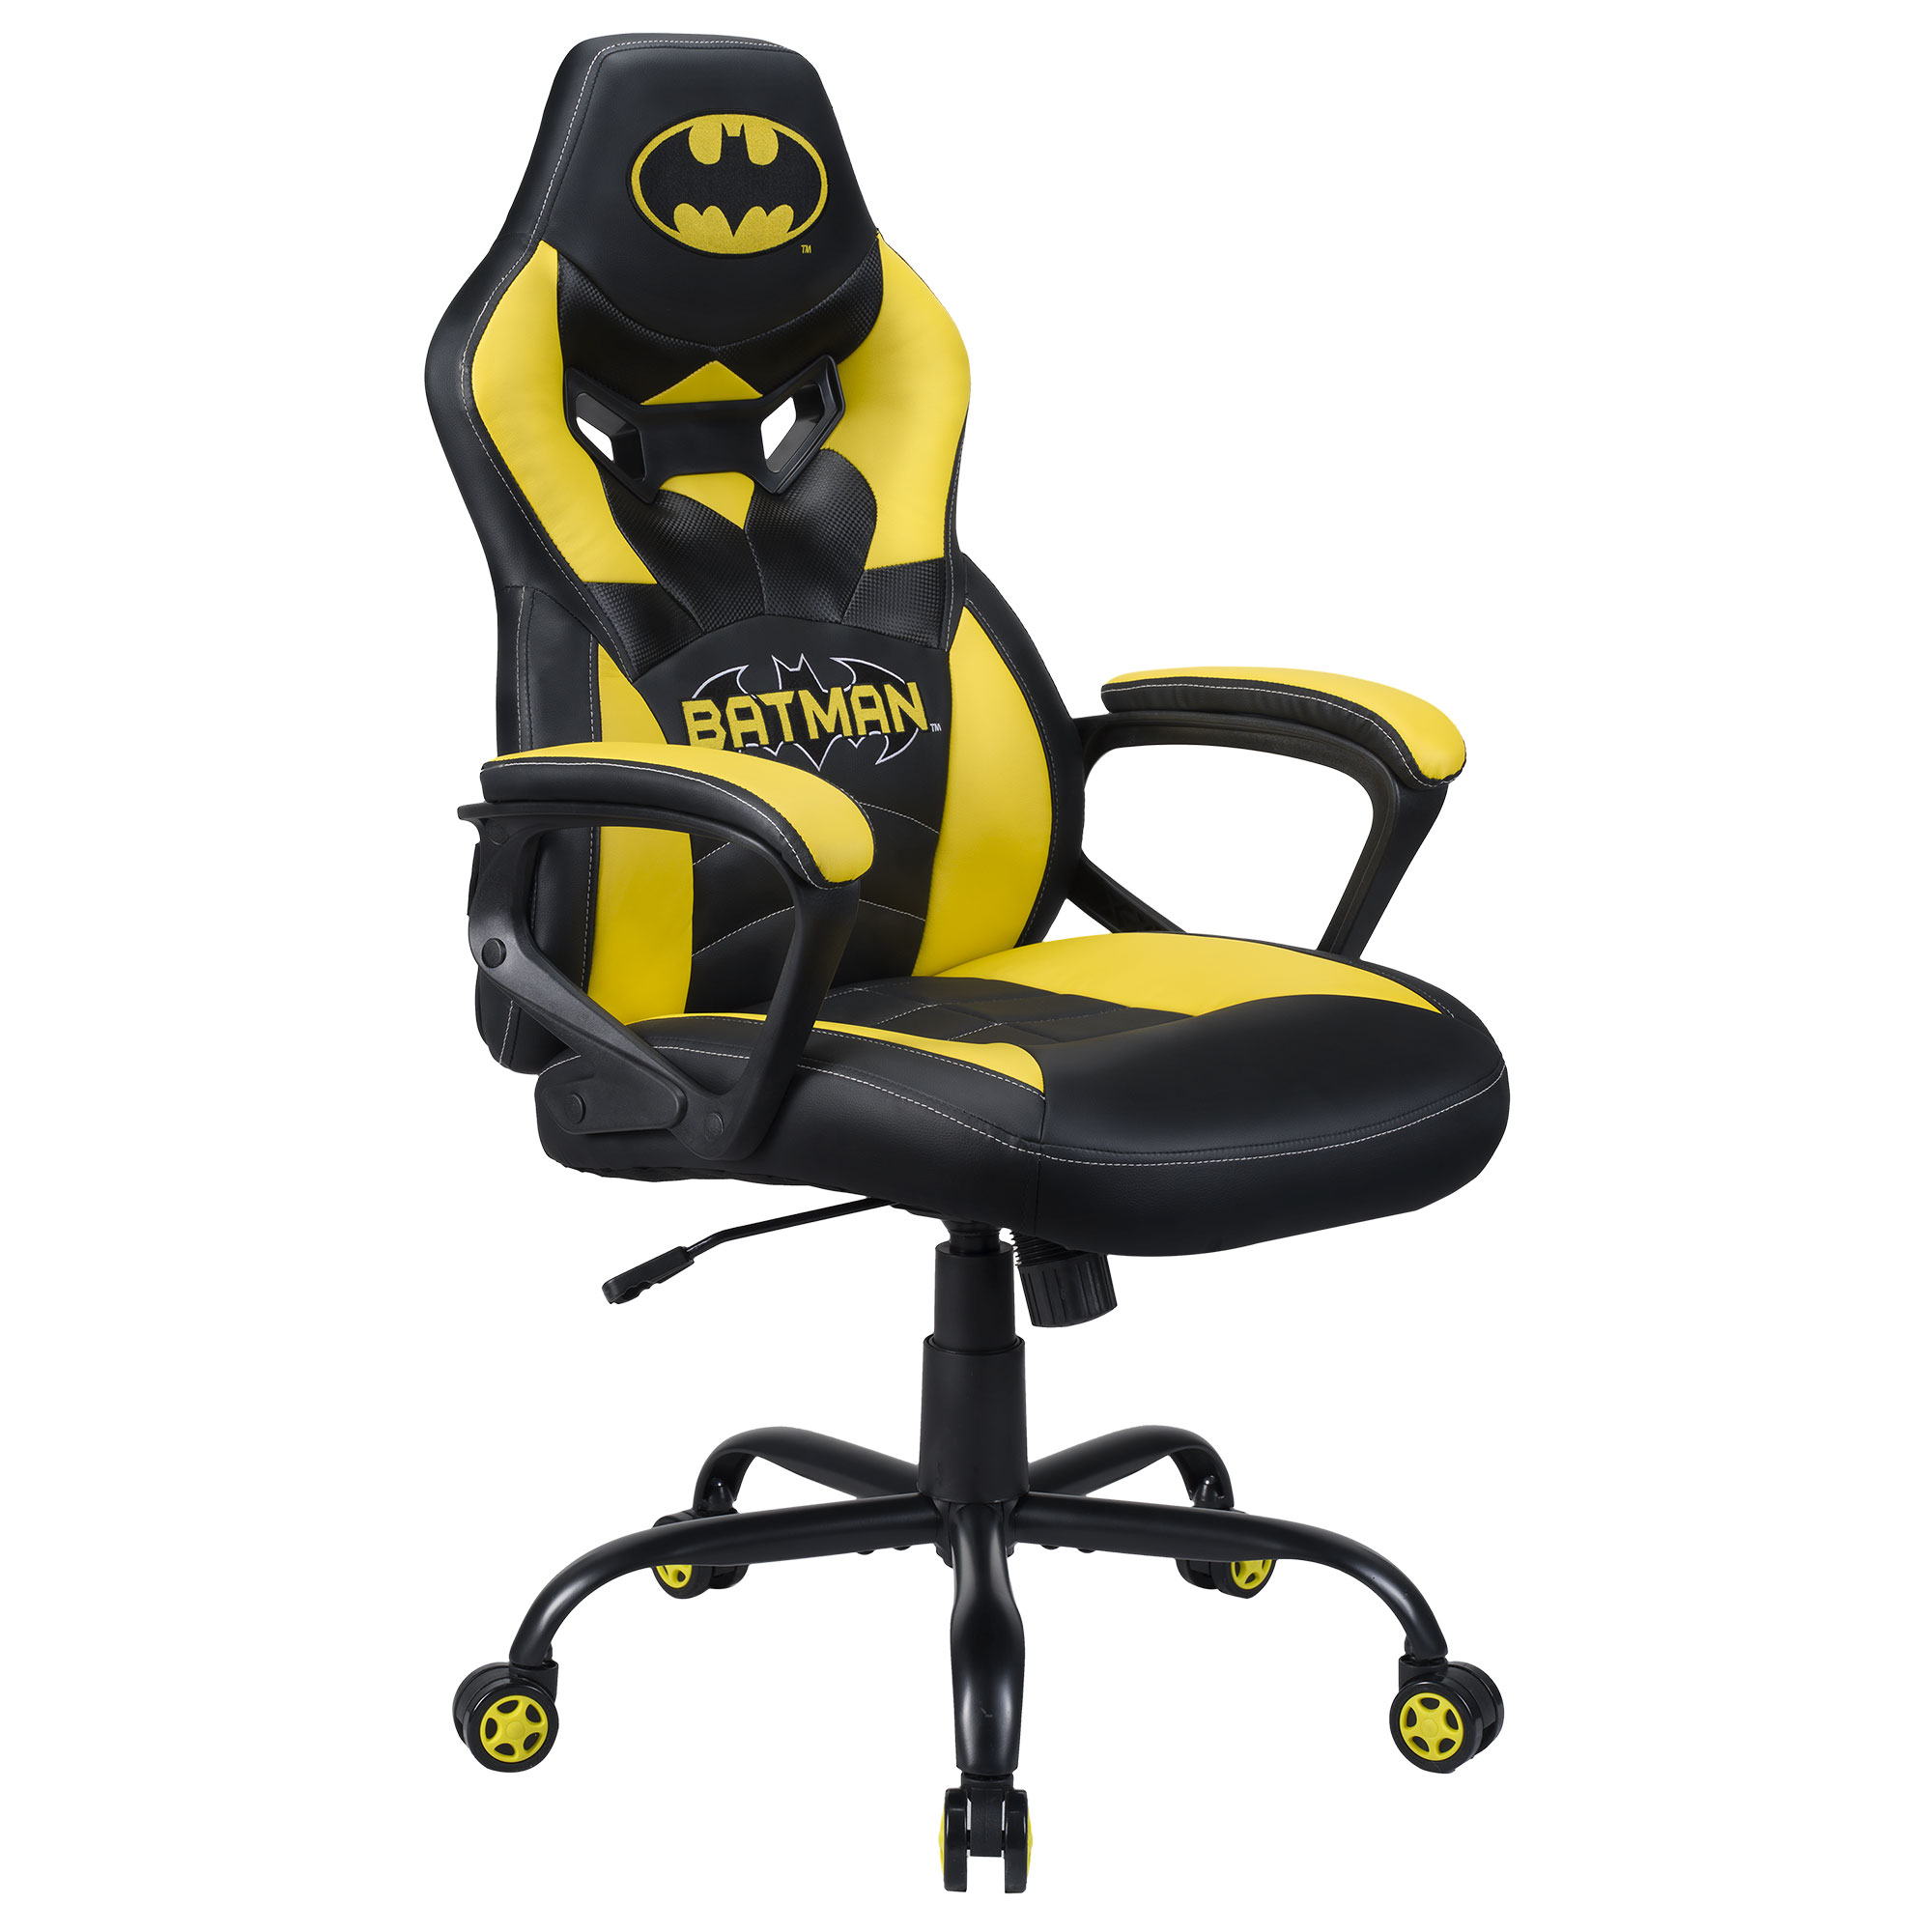 Junior Batman desk chair